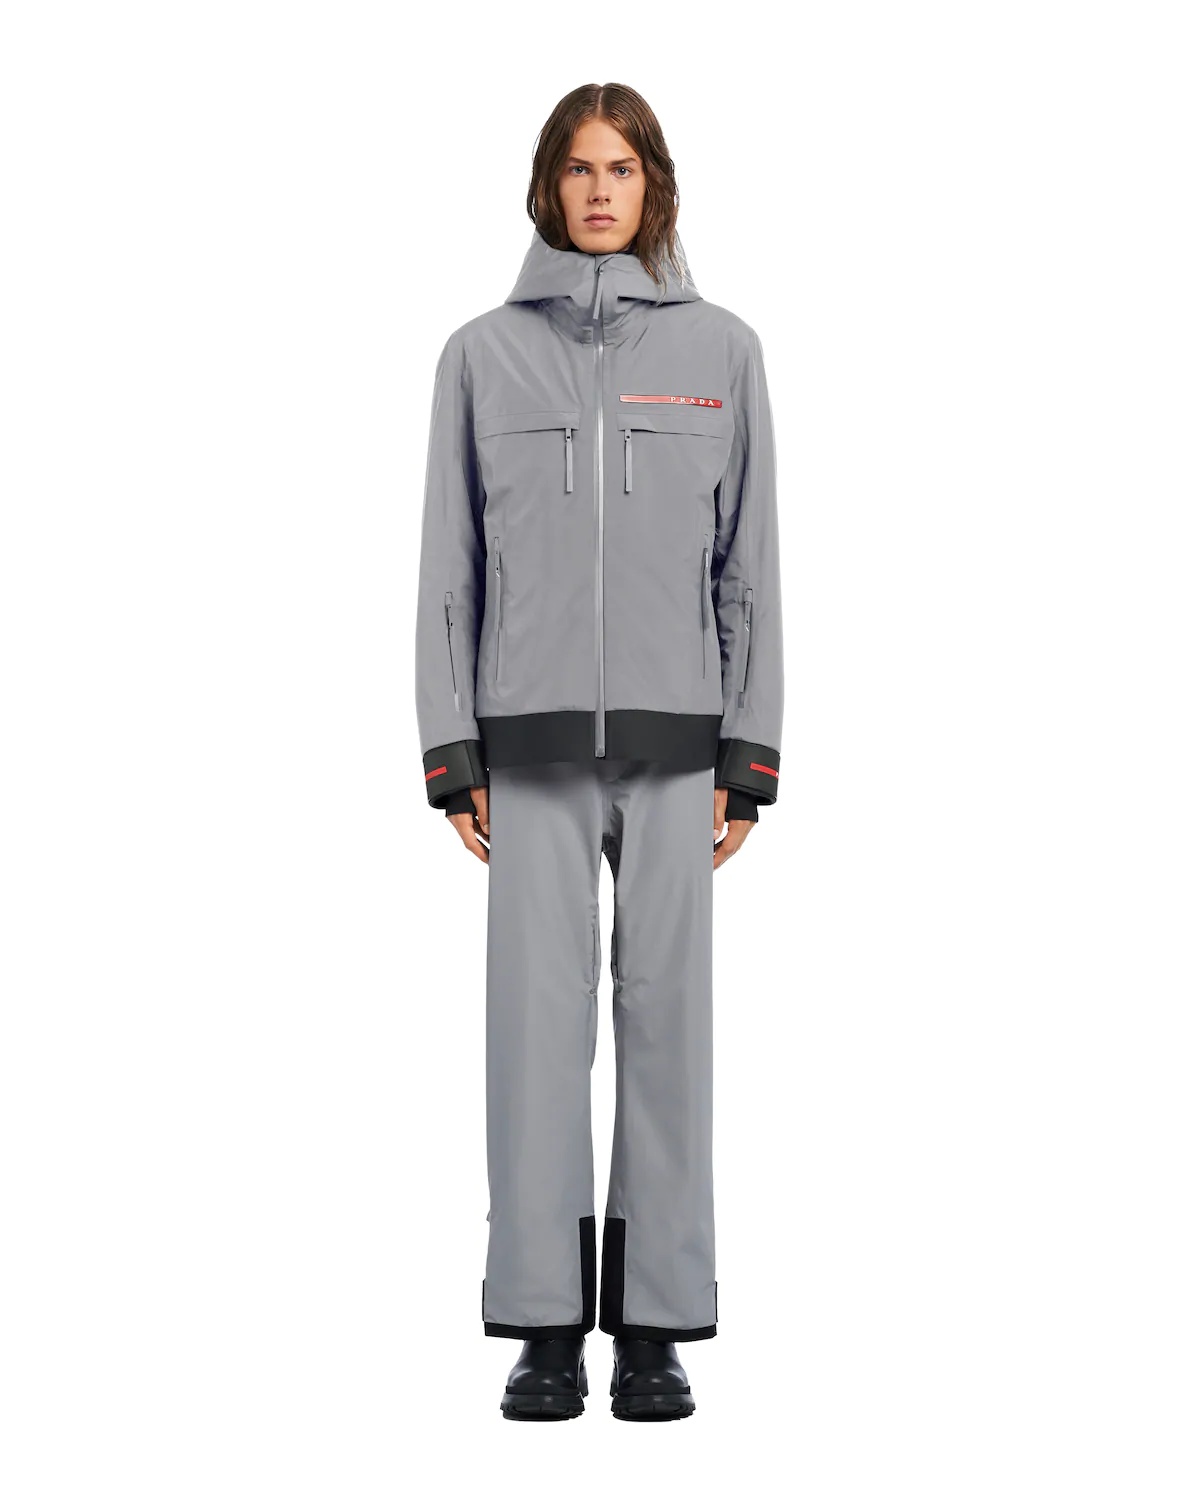 GORE-TEX ski jacket - 2